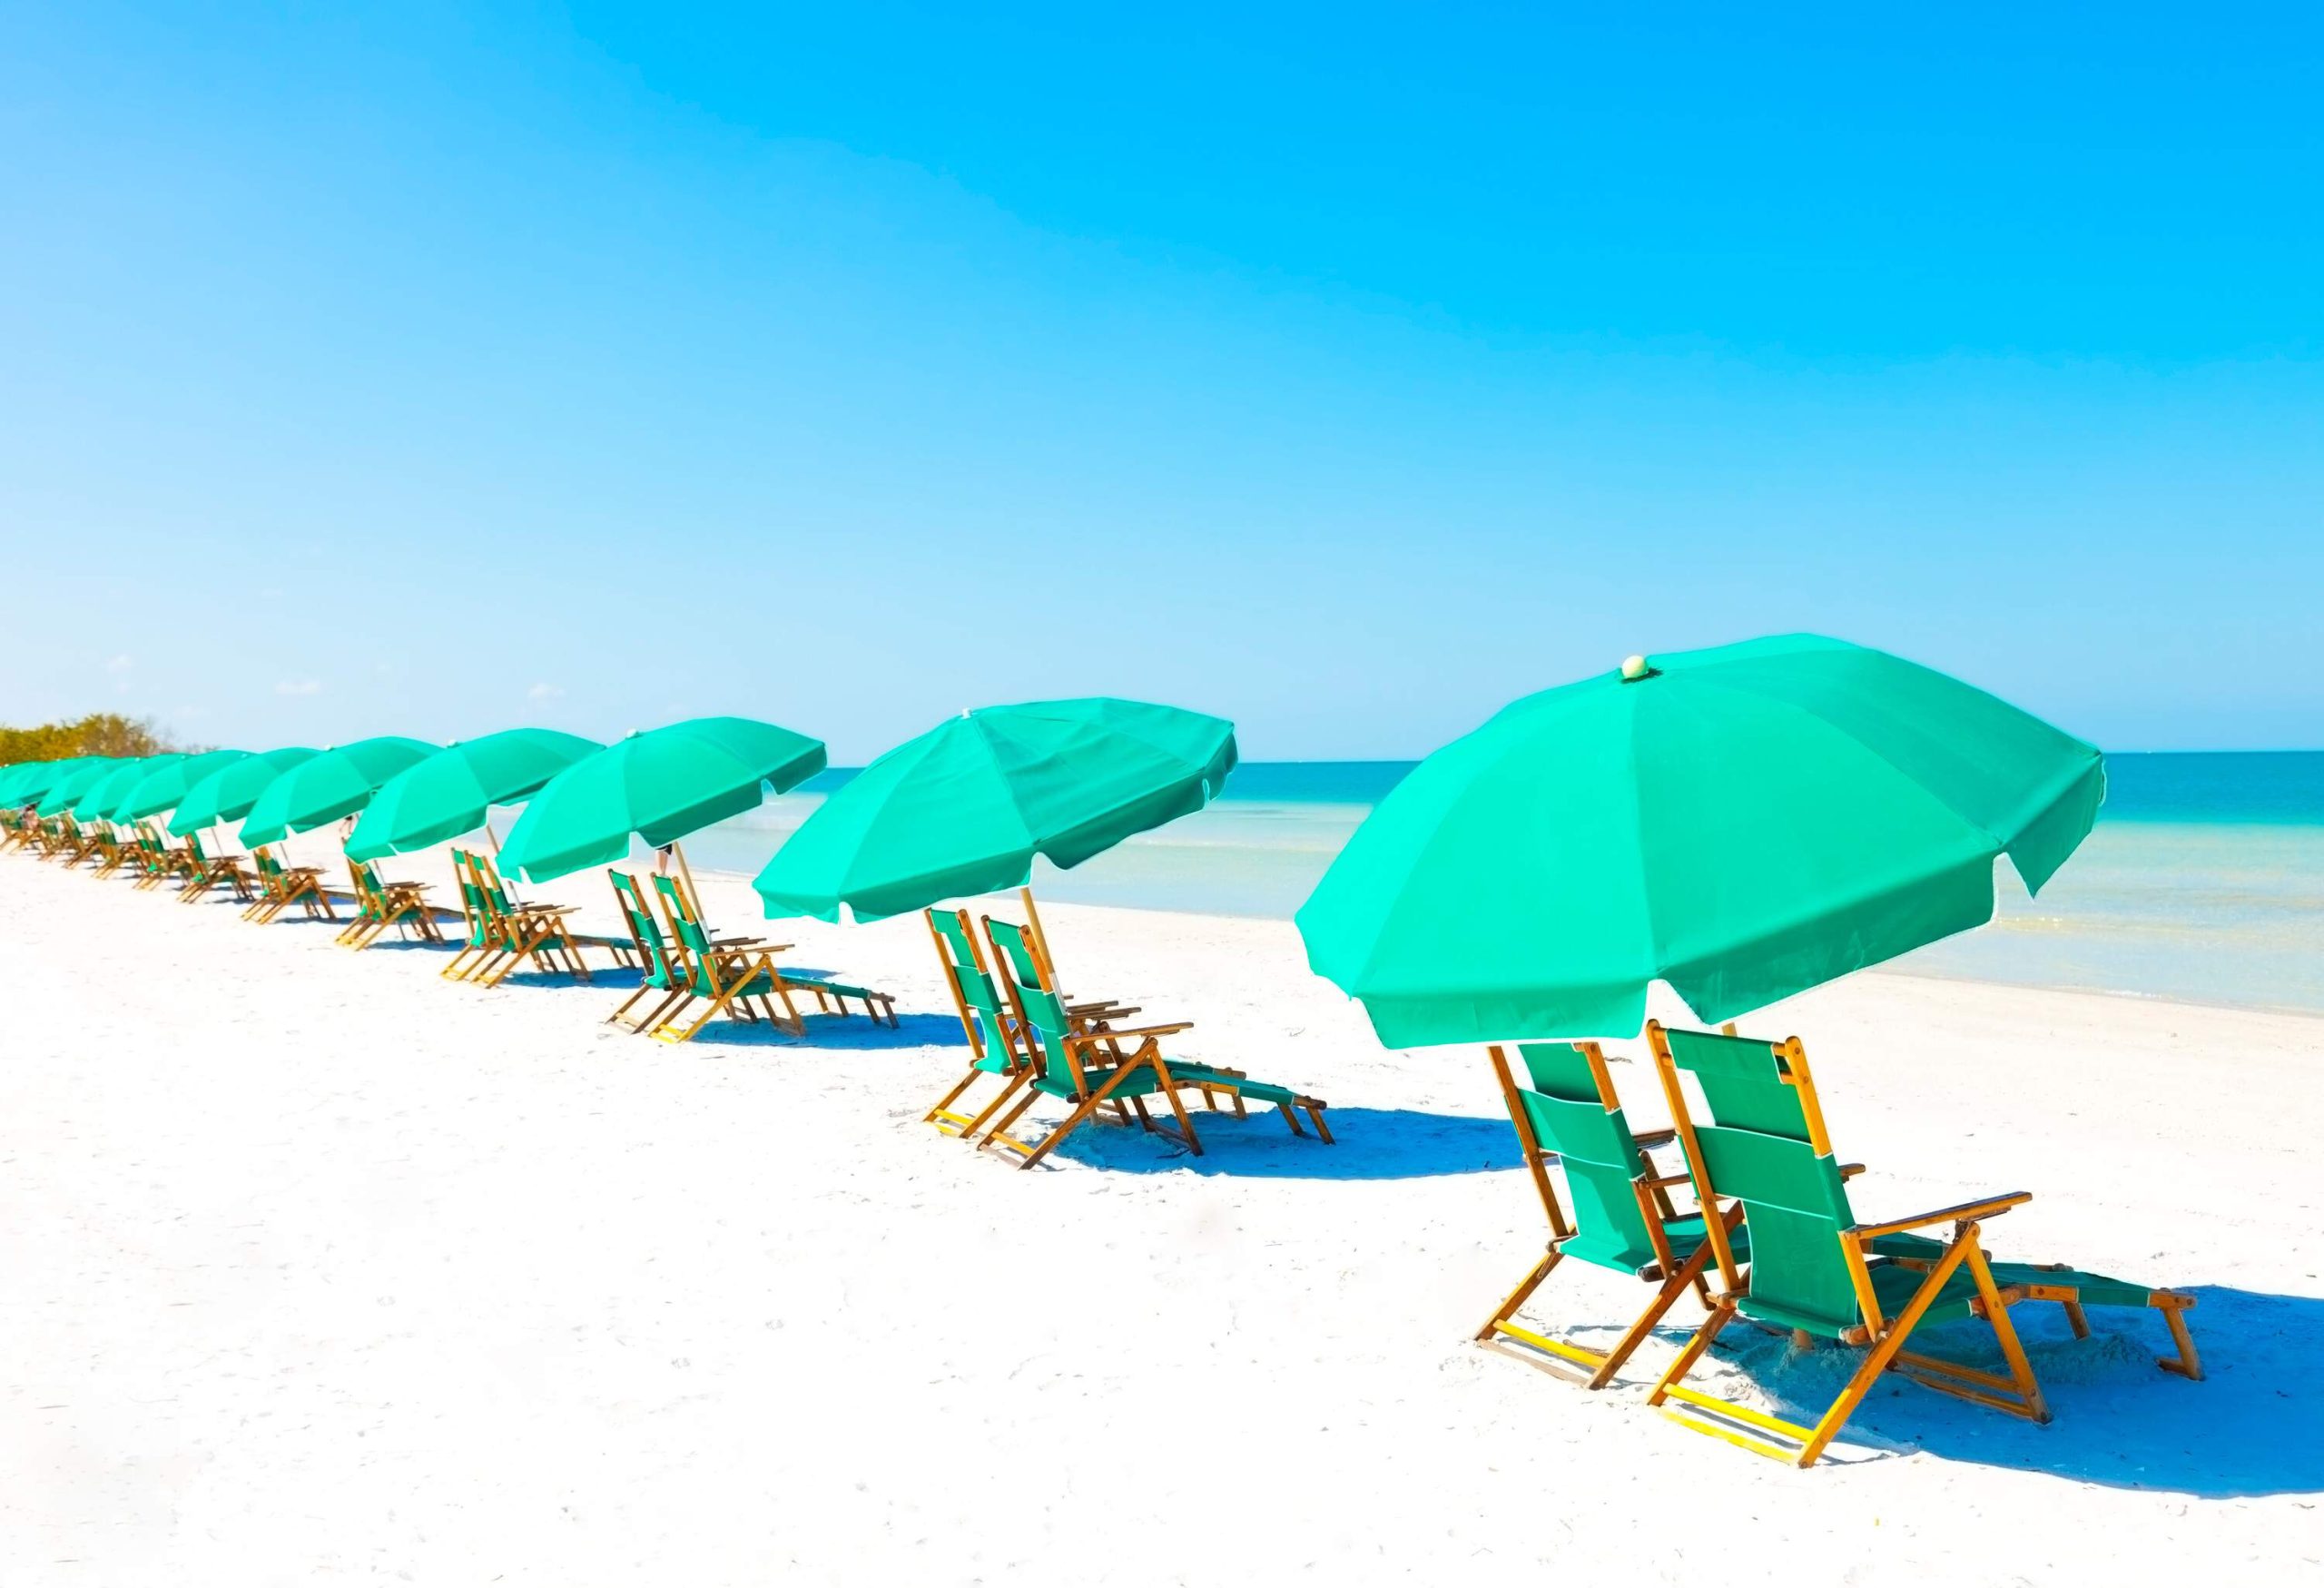 A row of sunbeds under green umbrellas on a white sand beach.